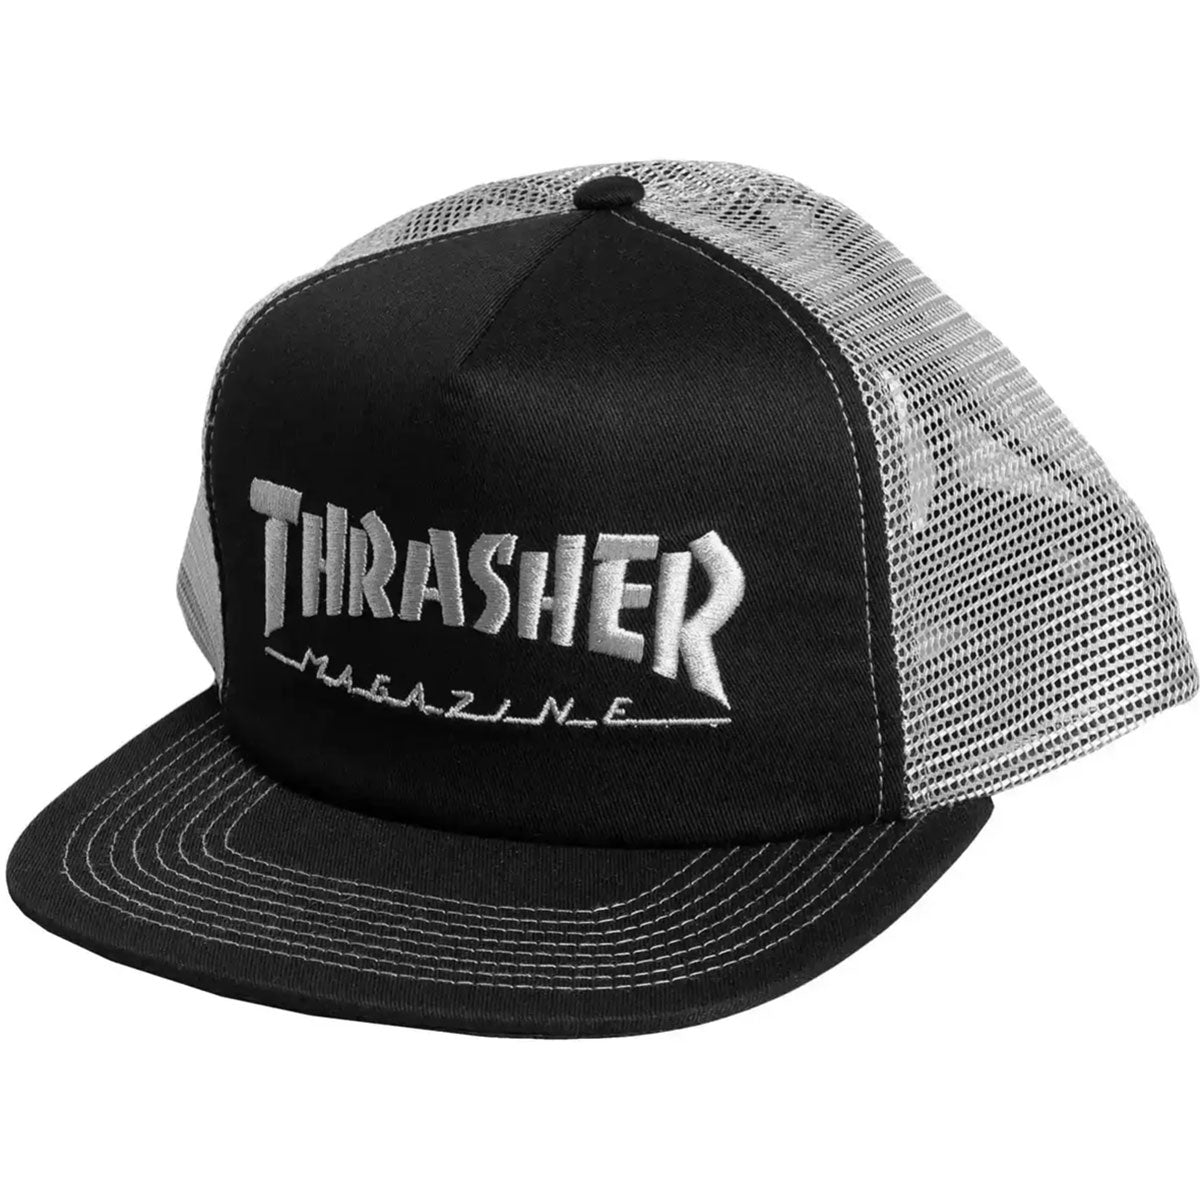 Thrasher Embroidered Logo Hat - Black/Grey image 1